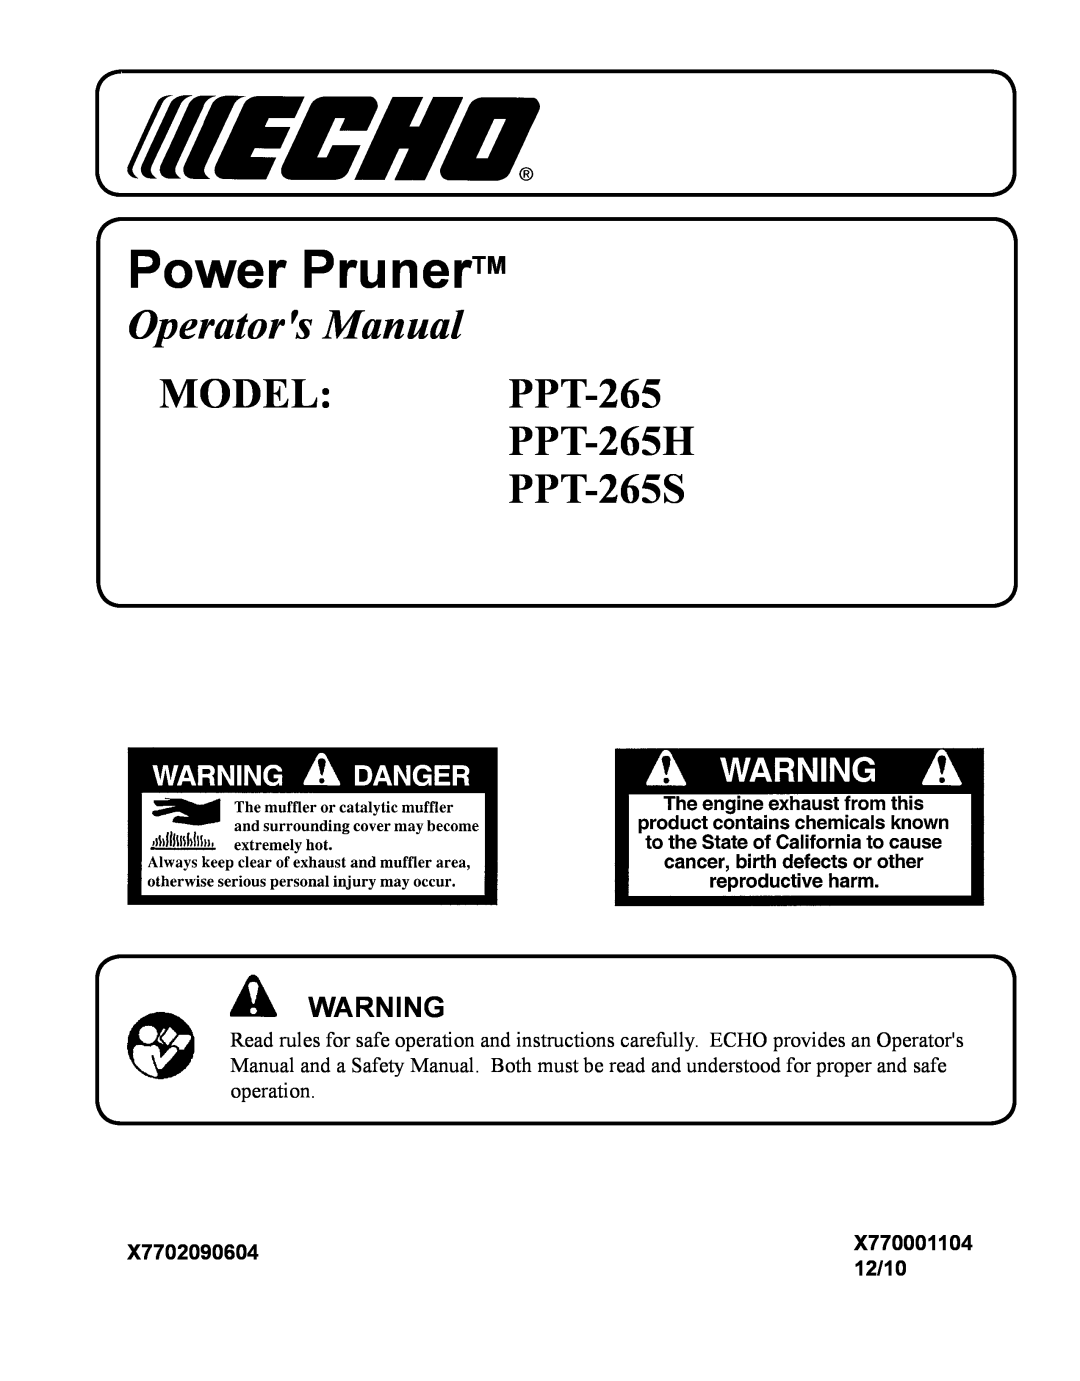 Echo manual X7702090604, 12/10, Power PrunerTM, Operators Manual, MODEL PPT-265 PPT-265H PPT-265S, X770001104 